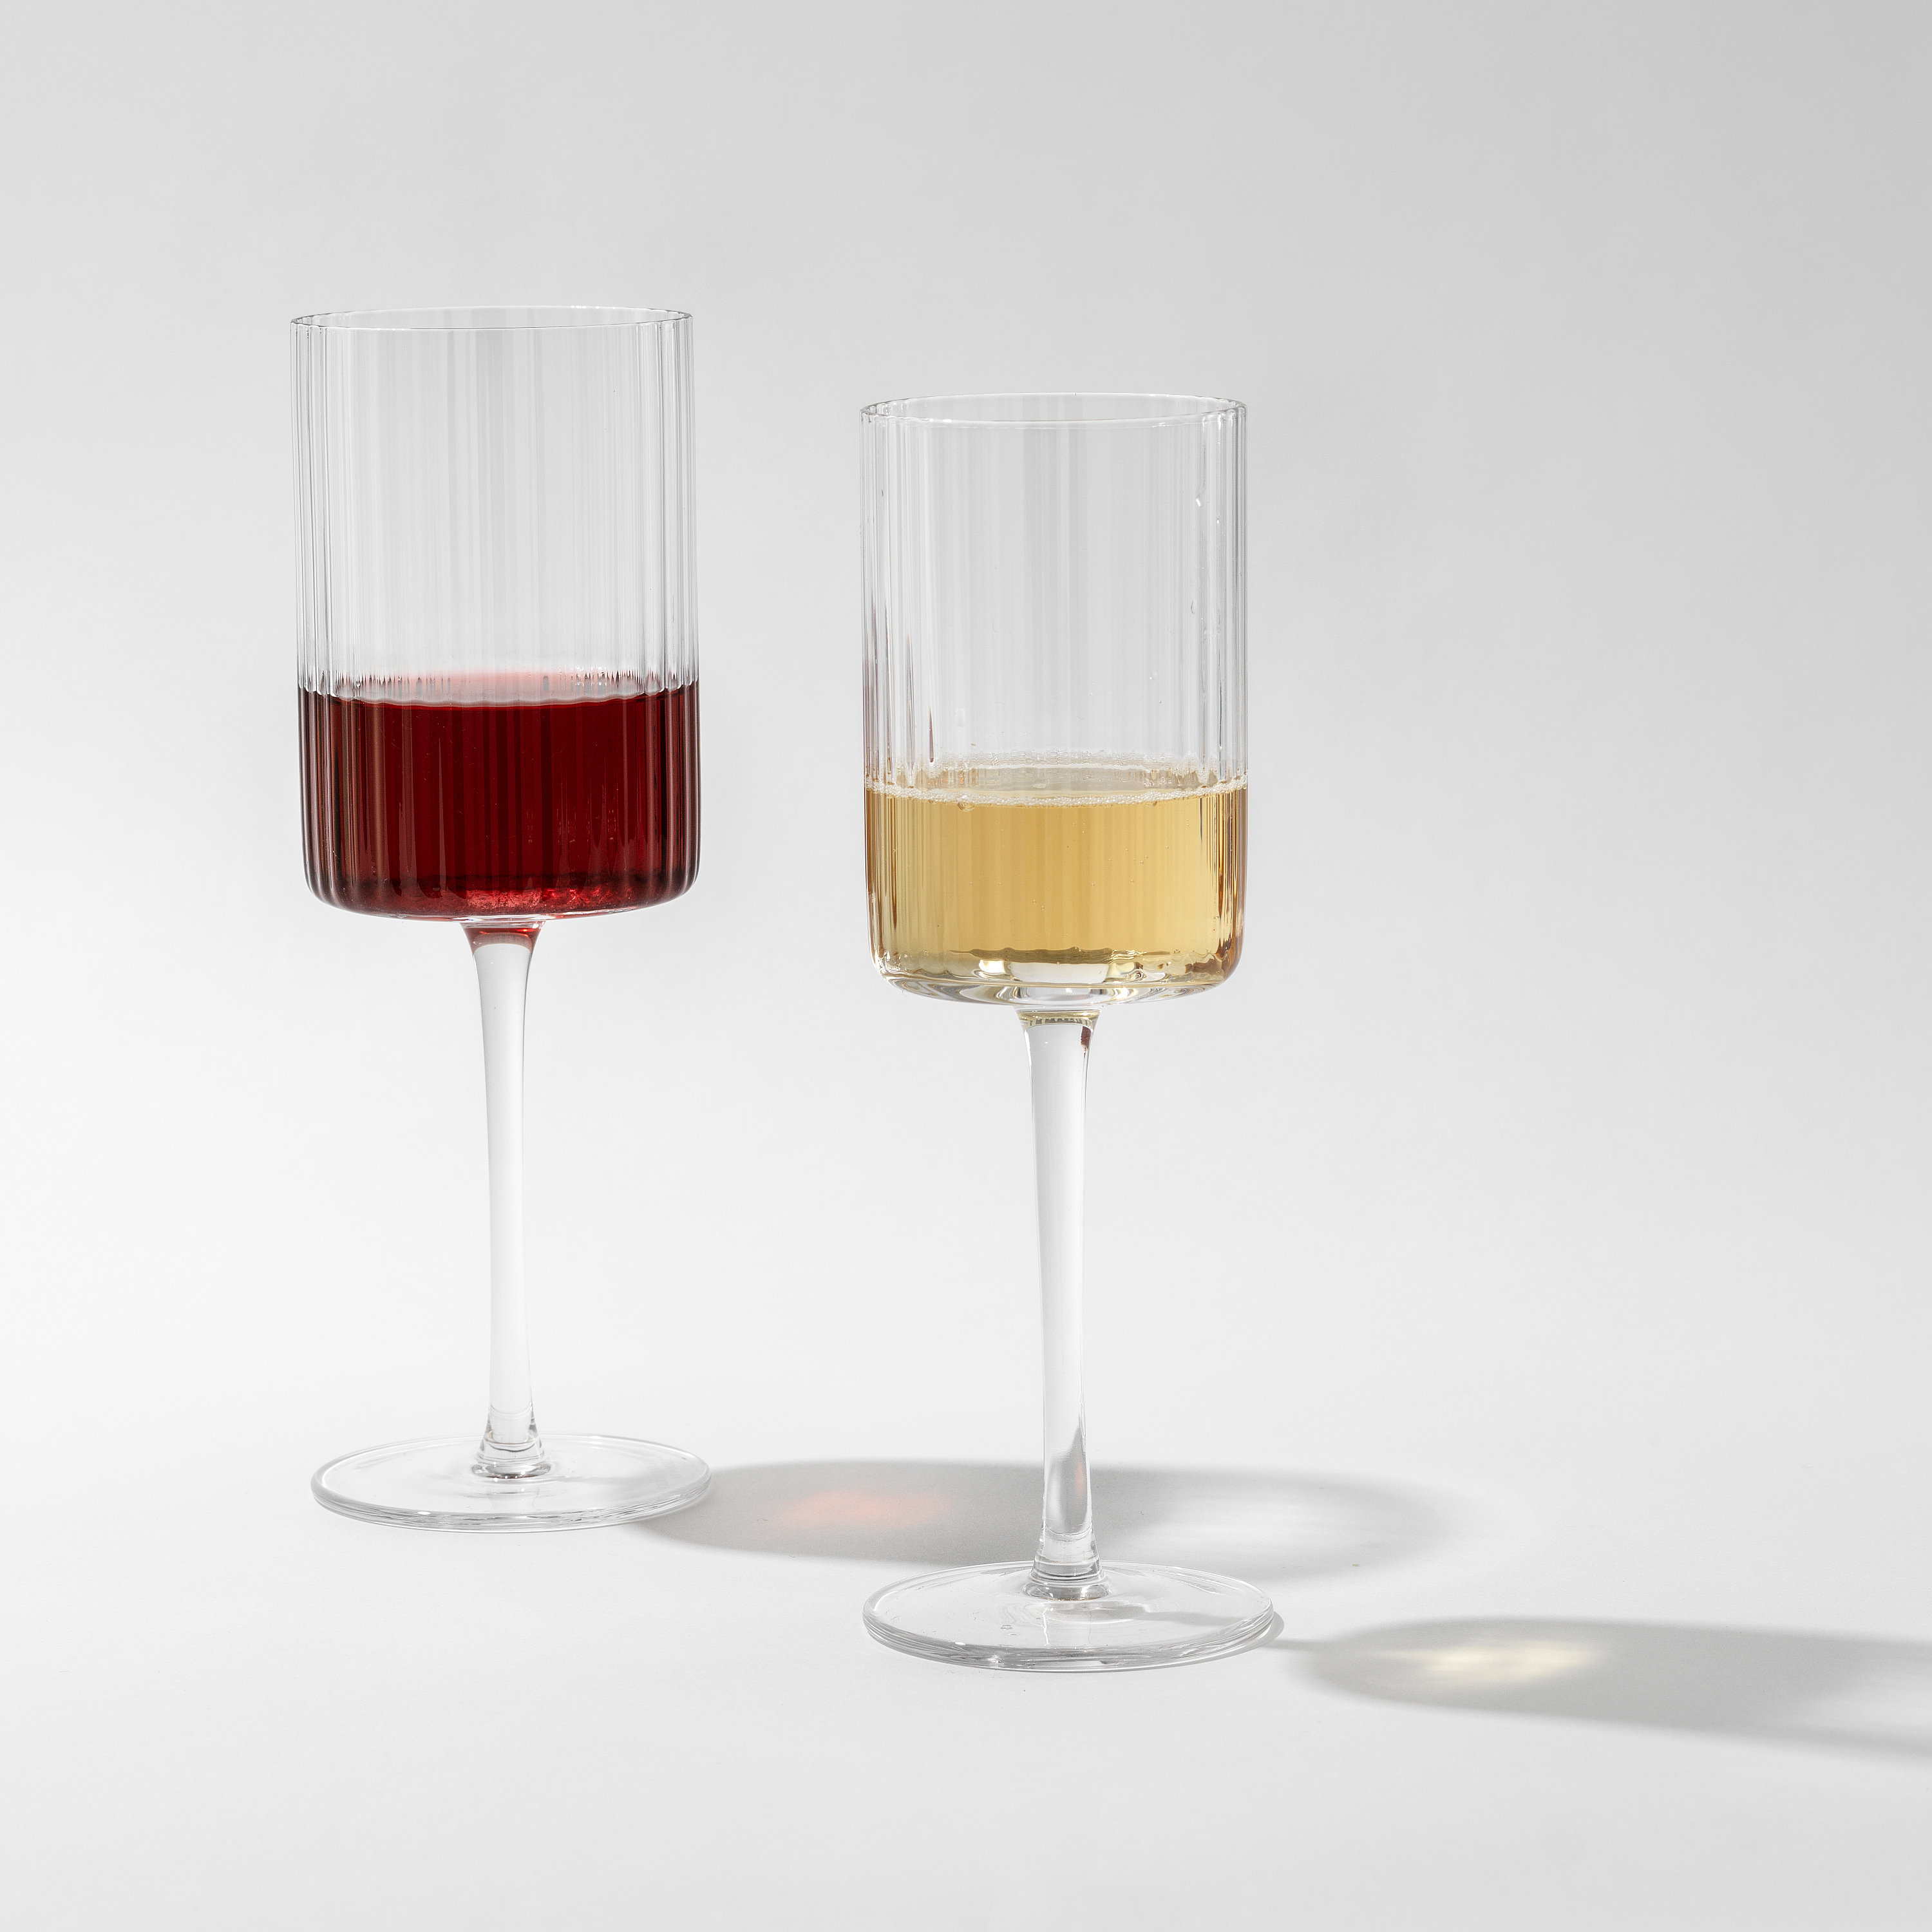 JoyJolt Christian Siriano New York Chroma Iridescent Champagne Flute Glass  - 6 oz - Set of 2